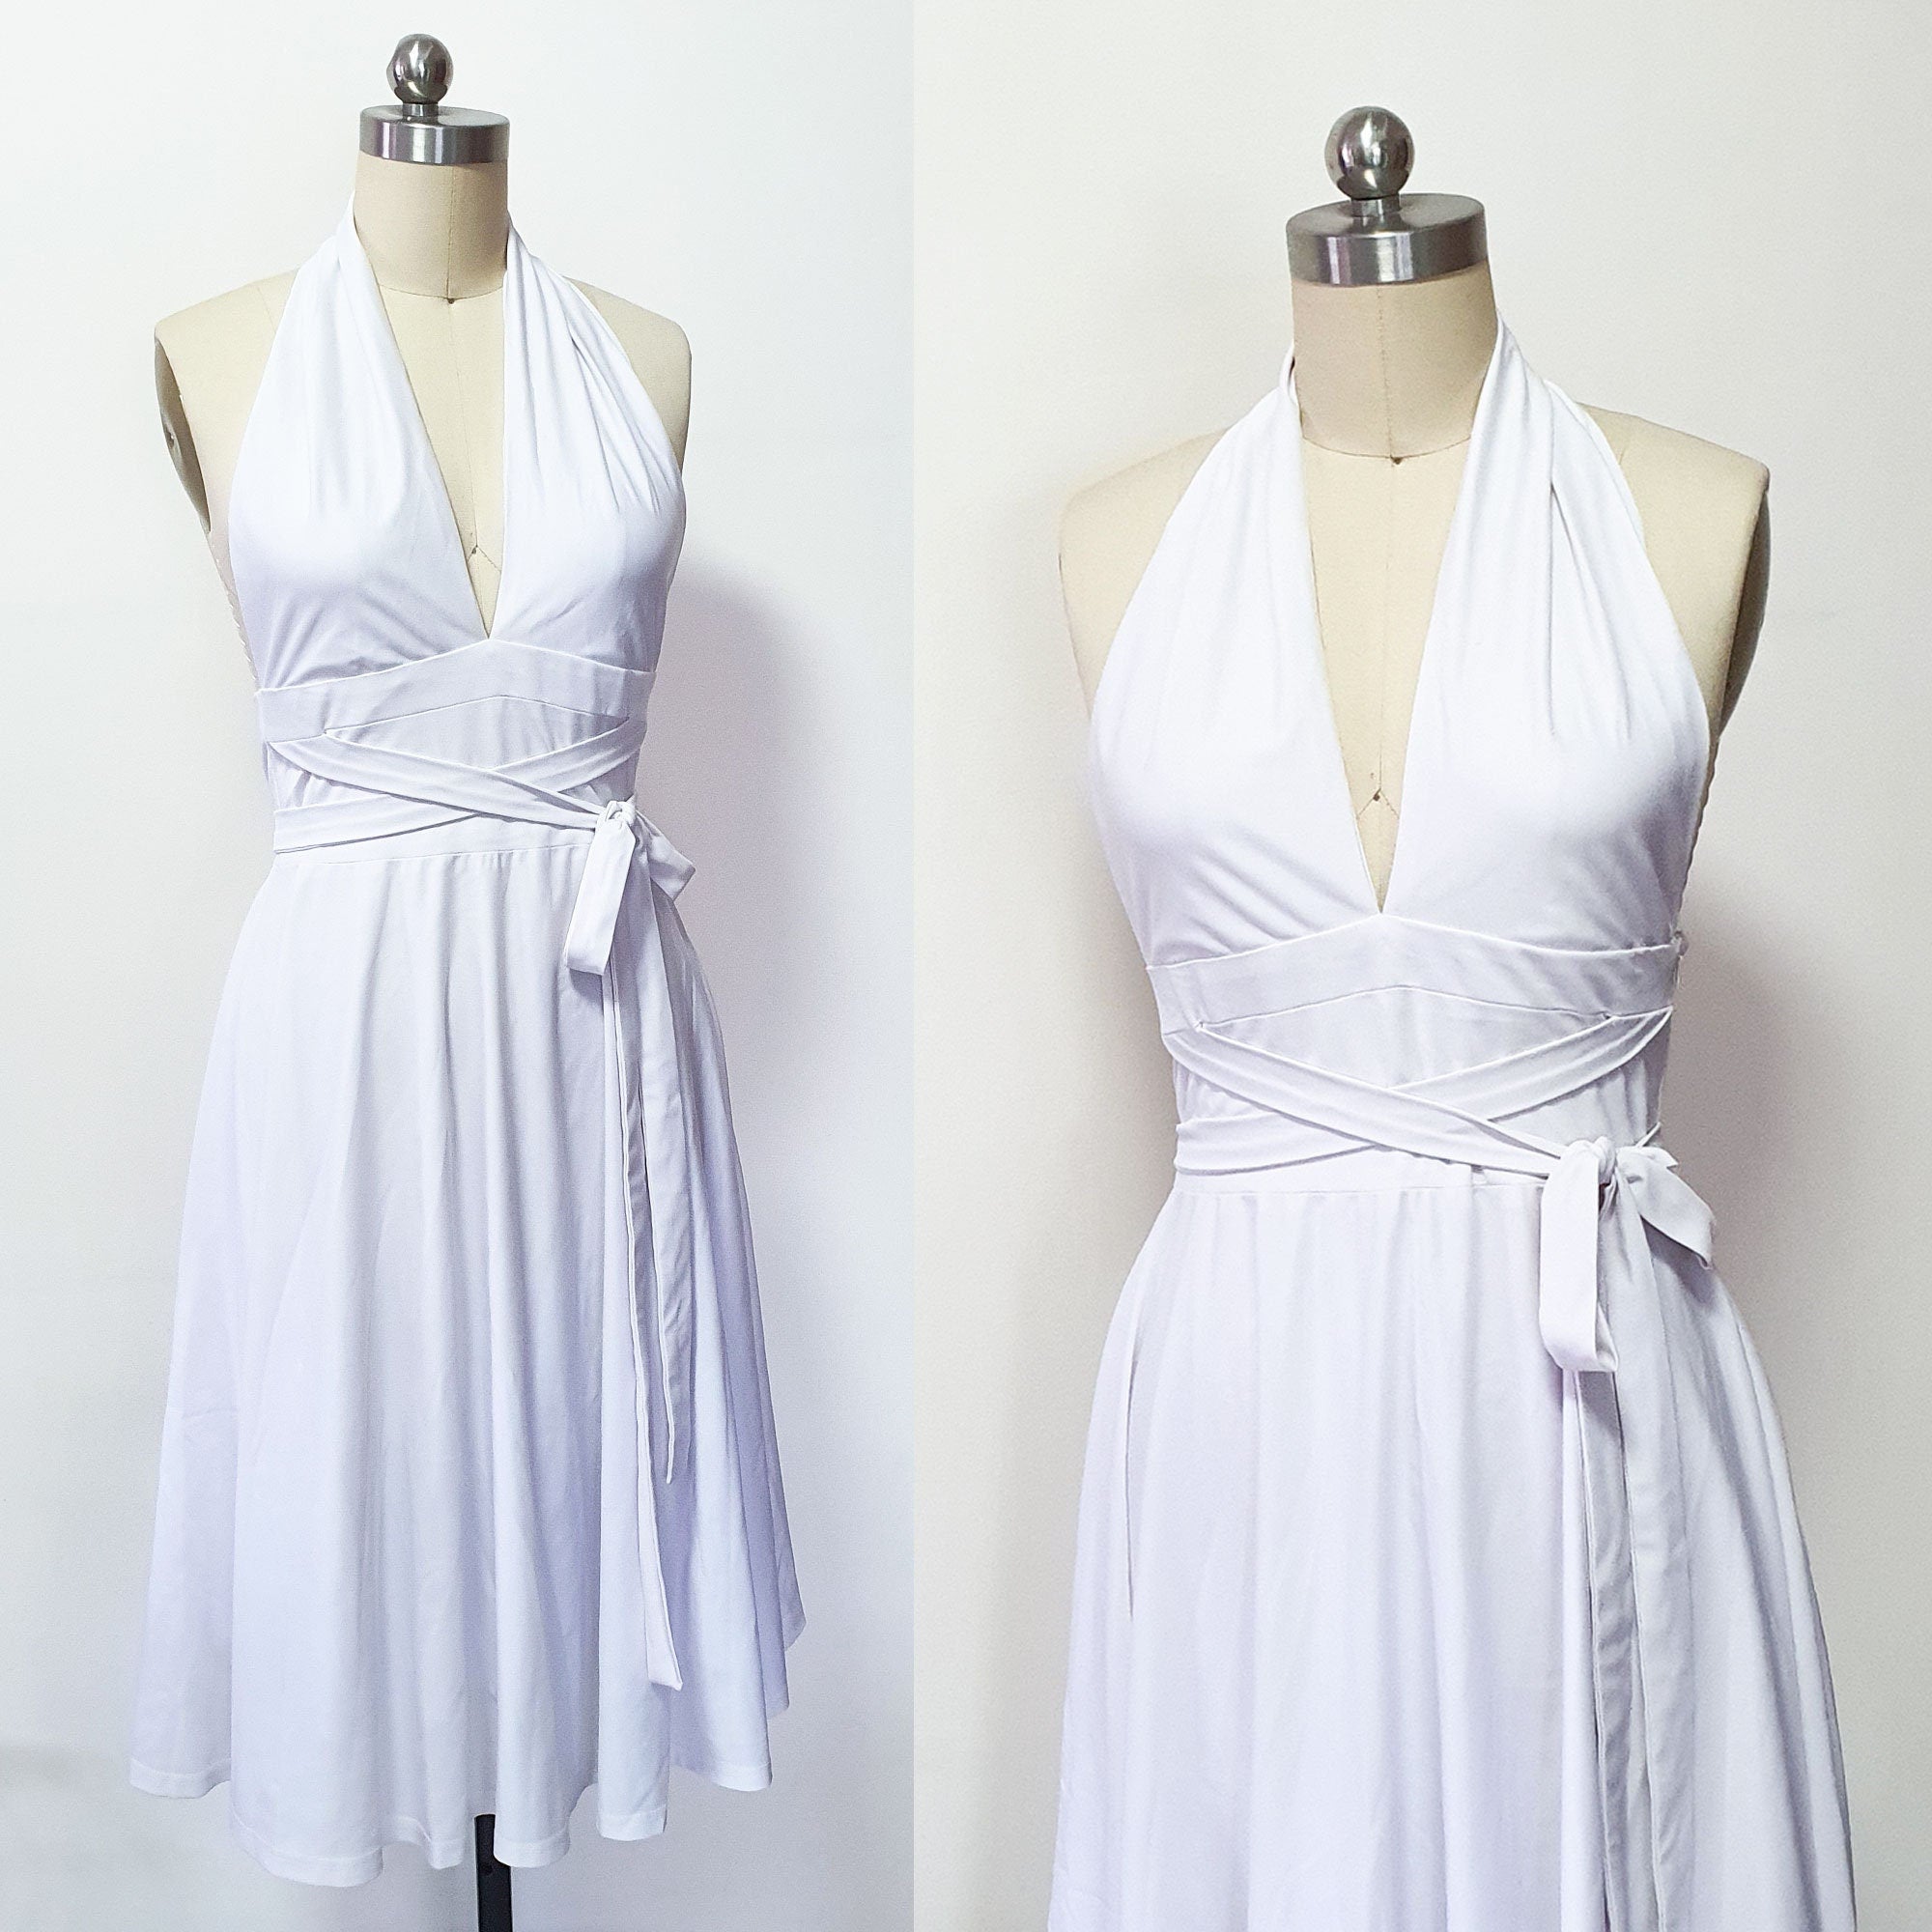 Lconic white dress short bridal dress wedding gown Custom made dress White halter neck dress 1955 The Seven Year Itch inspired dress